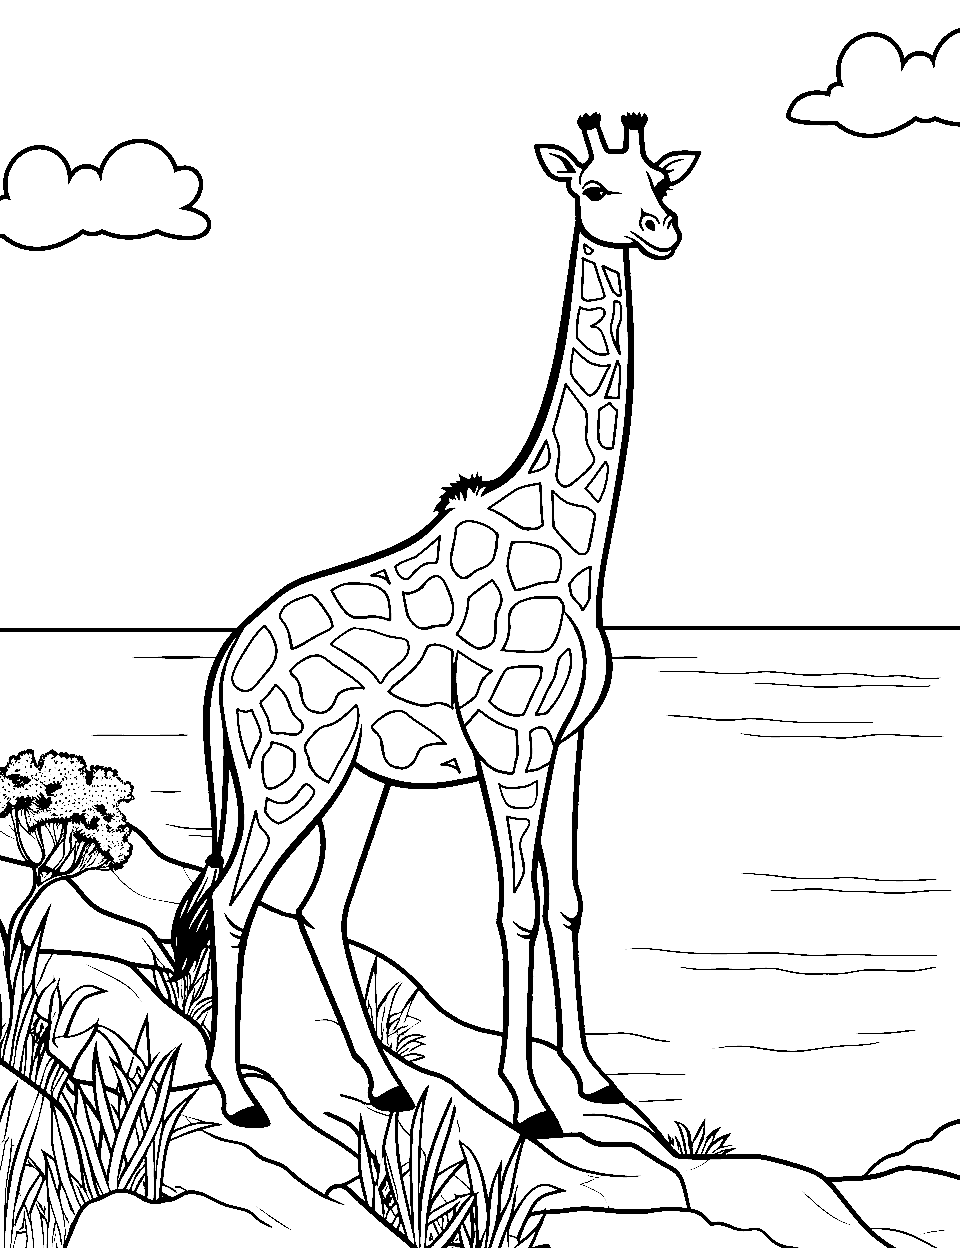 Ocean Breeze Giraffe Coloring Page - A giraffe enjoying the sea breeze on a cliff.